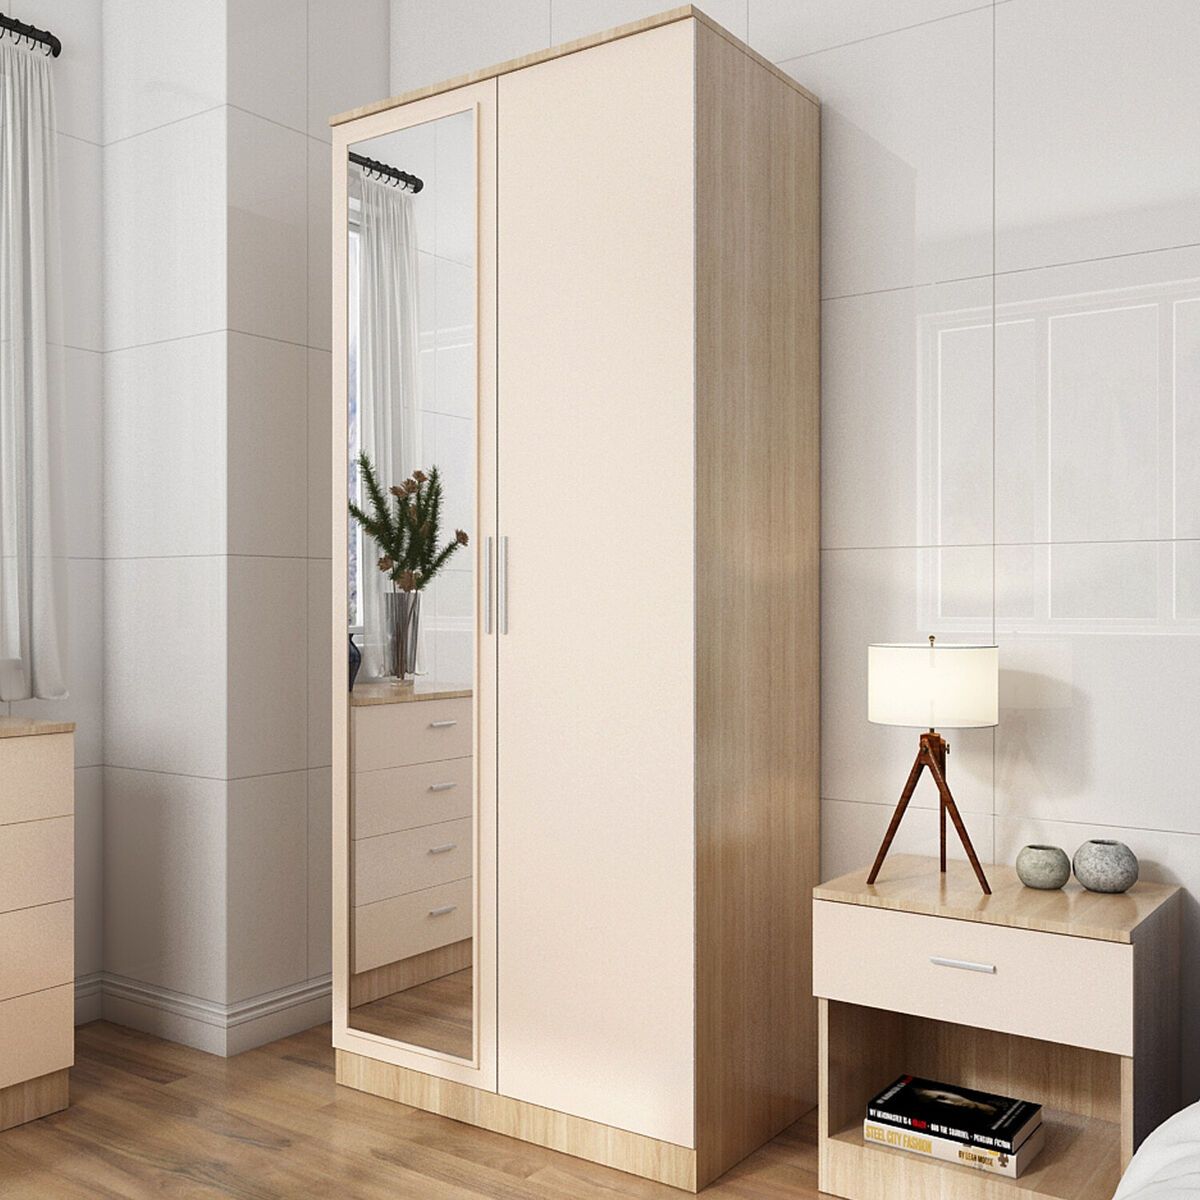 High Gloss Cream Wardrobe Double Door With Hanging Rail Bedroom Furniture  Set | Ebay Regarding Cream Gloss Wardrobes (View 5 of 15)